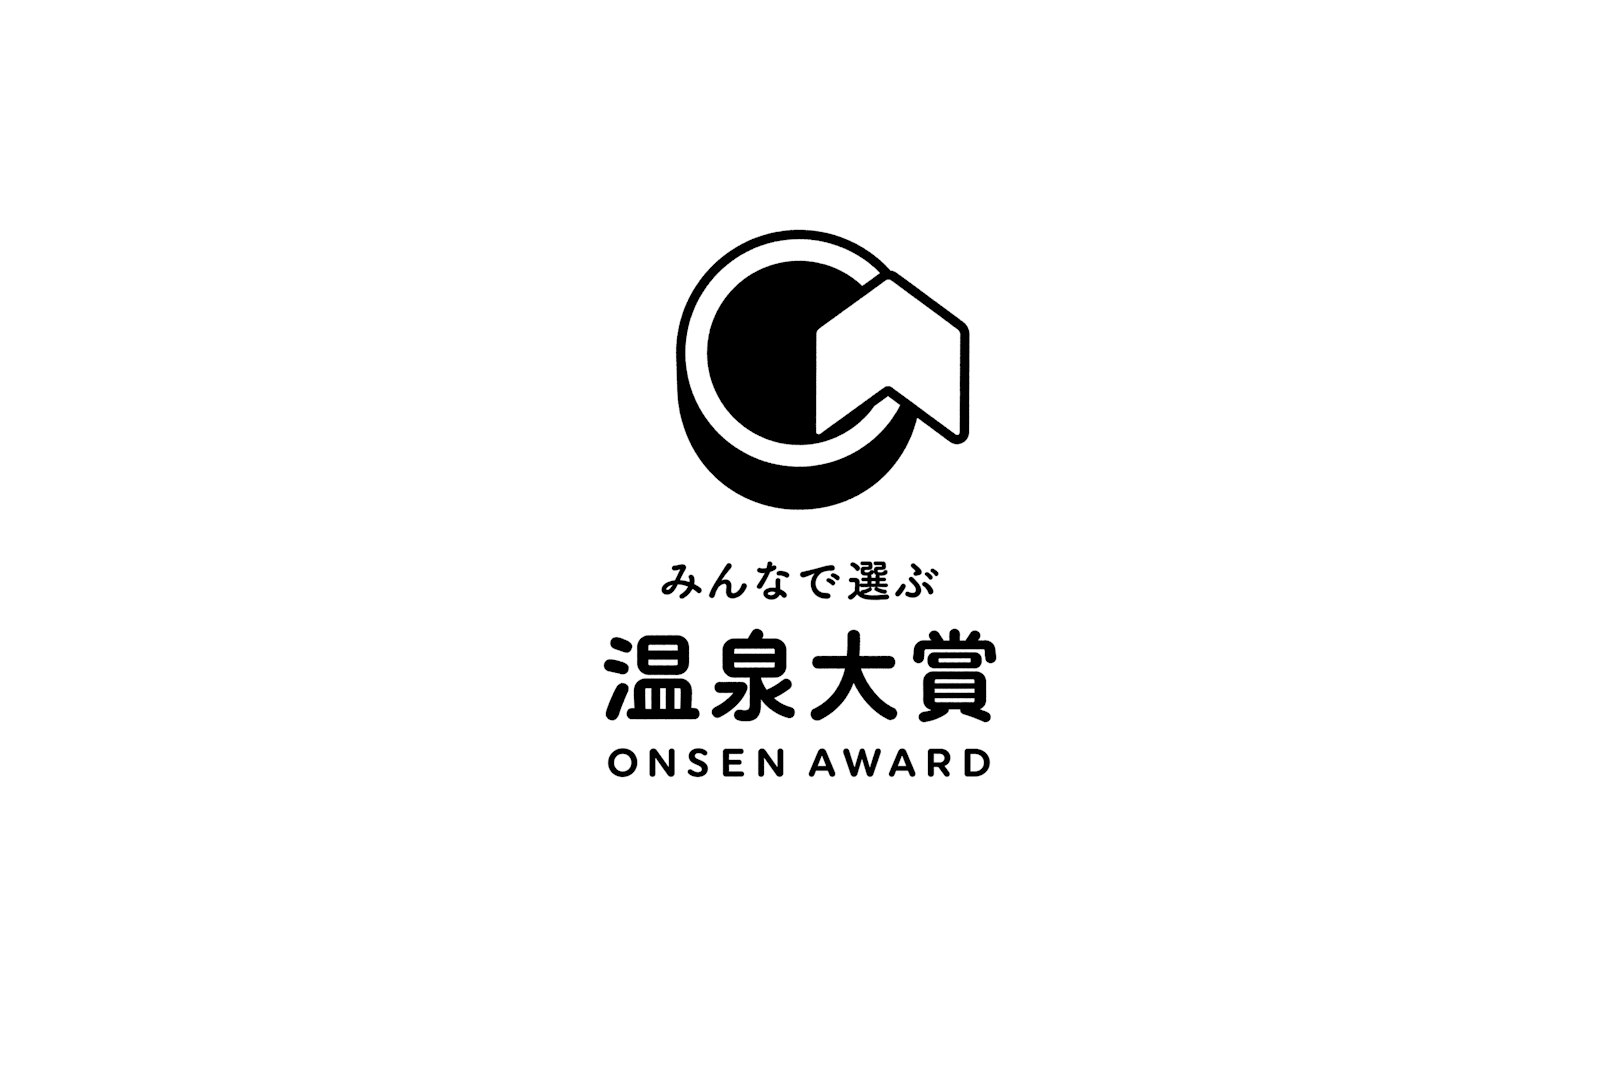 Biglobe Onsen Award